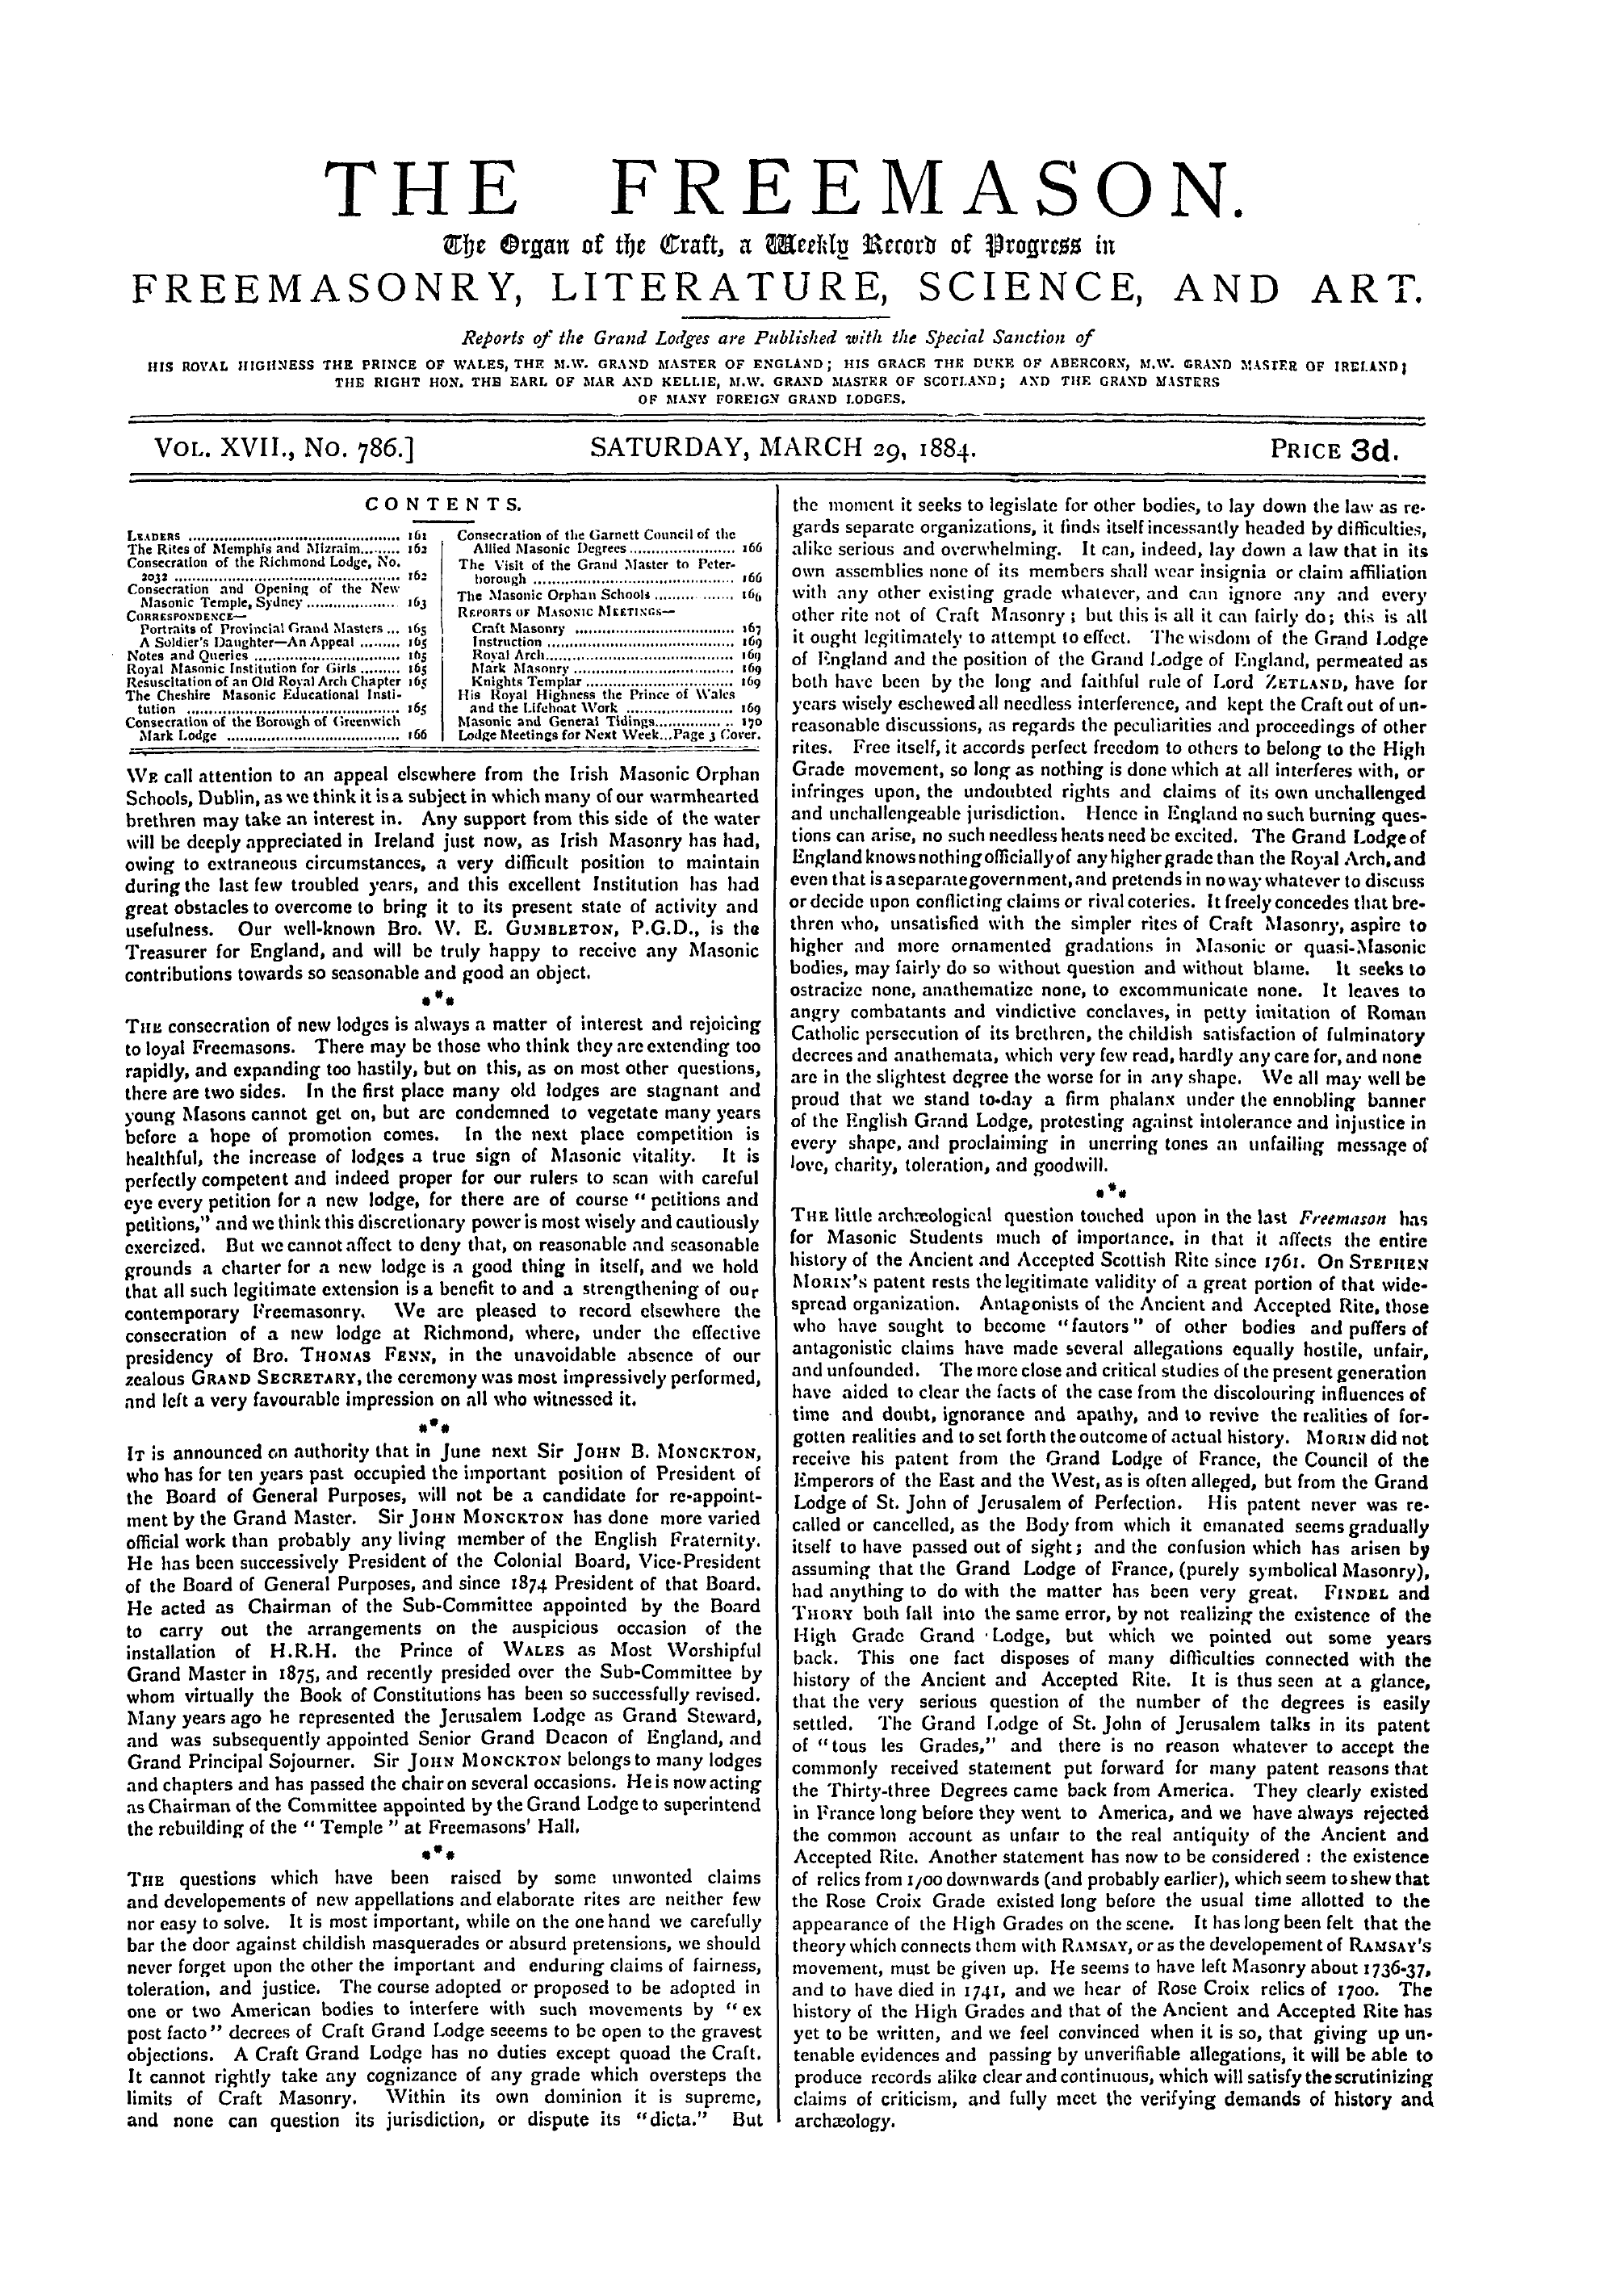 The Freemason: 1884-03-29 - Contents.